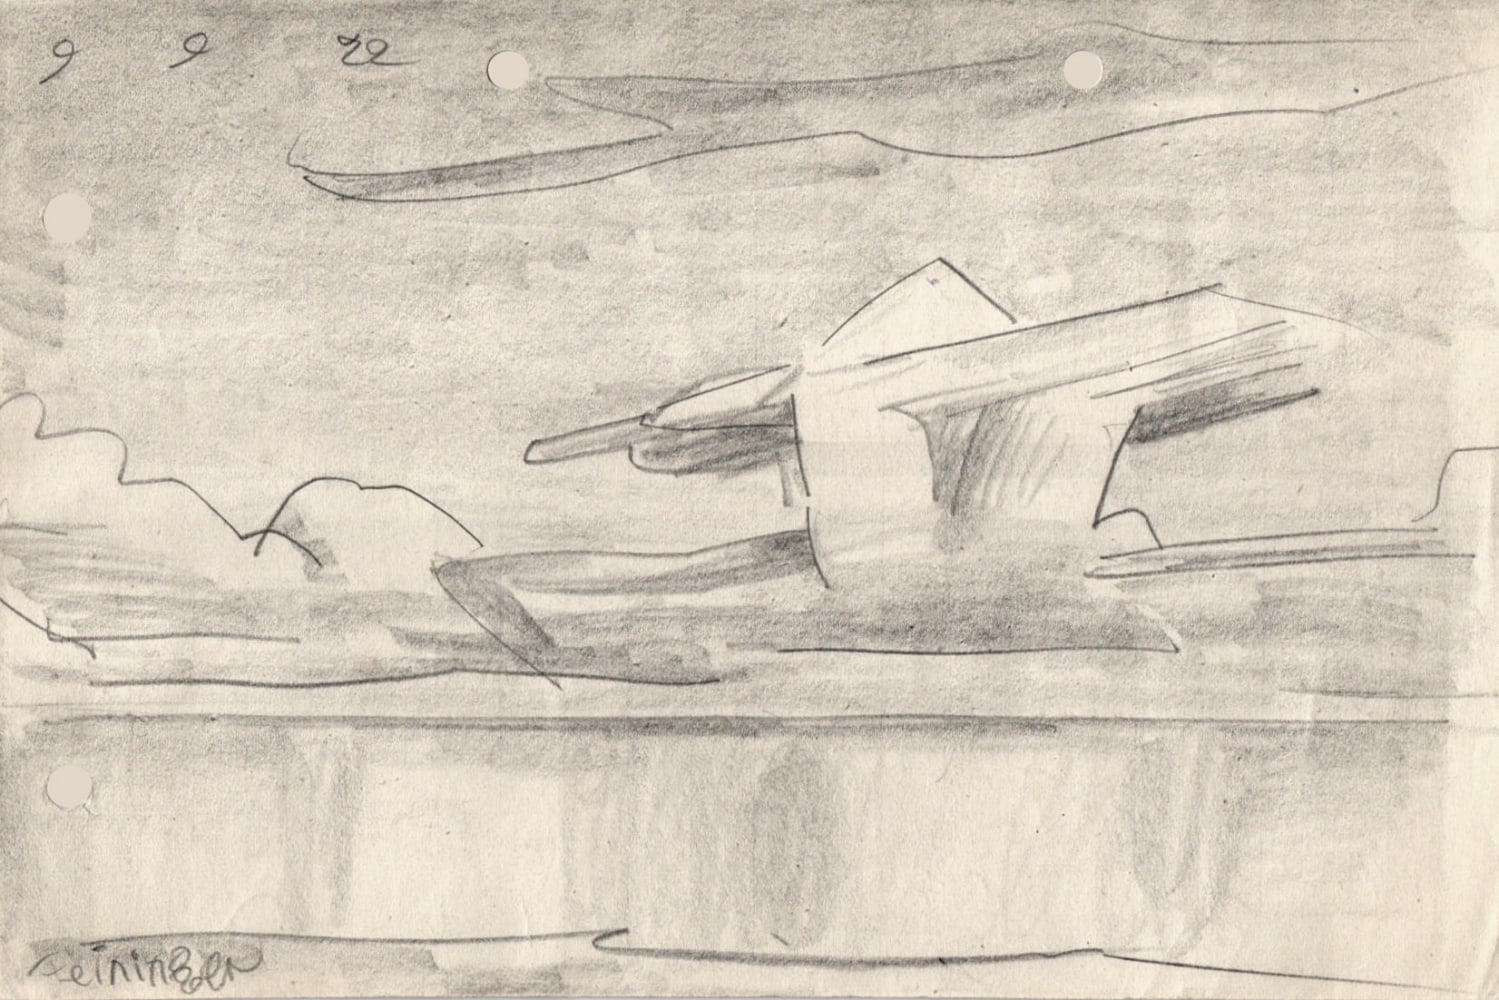 Lyonel&amp;nbsp;Feininger (1871&amp;ndash;1956)

(Cloud Formation), 1922

Pencil on paper
5 5/8 x 8 7/16 in. (14.3 x 21.4 cm)

Signed lower left:&amp;nbsp;Feininger&amp;nbsp;

Dated upper left:&amp;nbsp;9 9 22